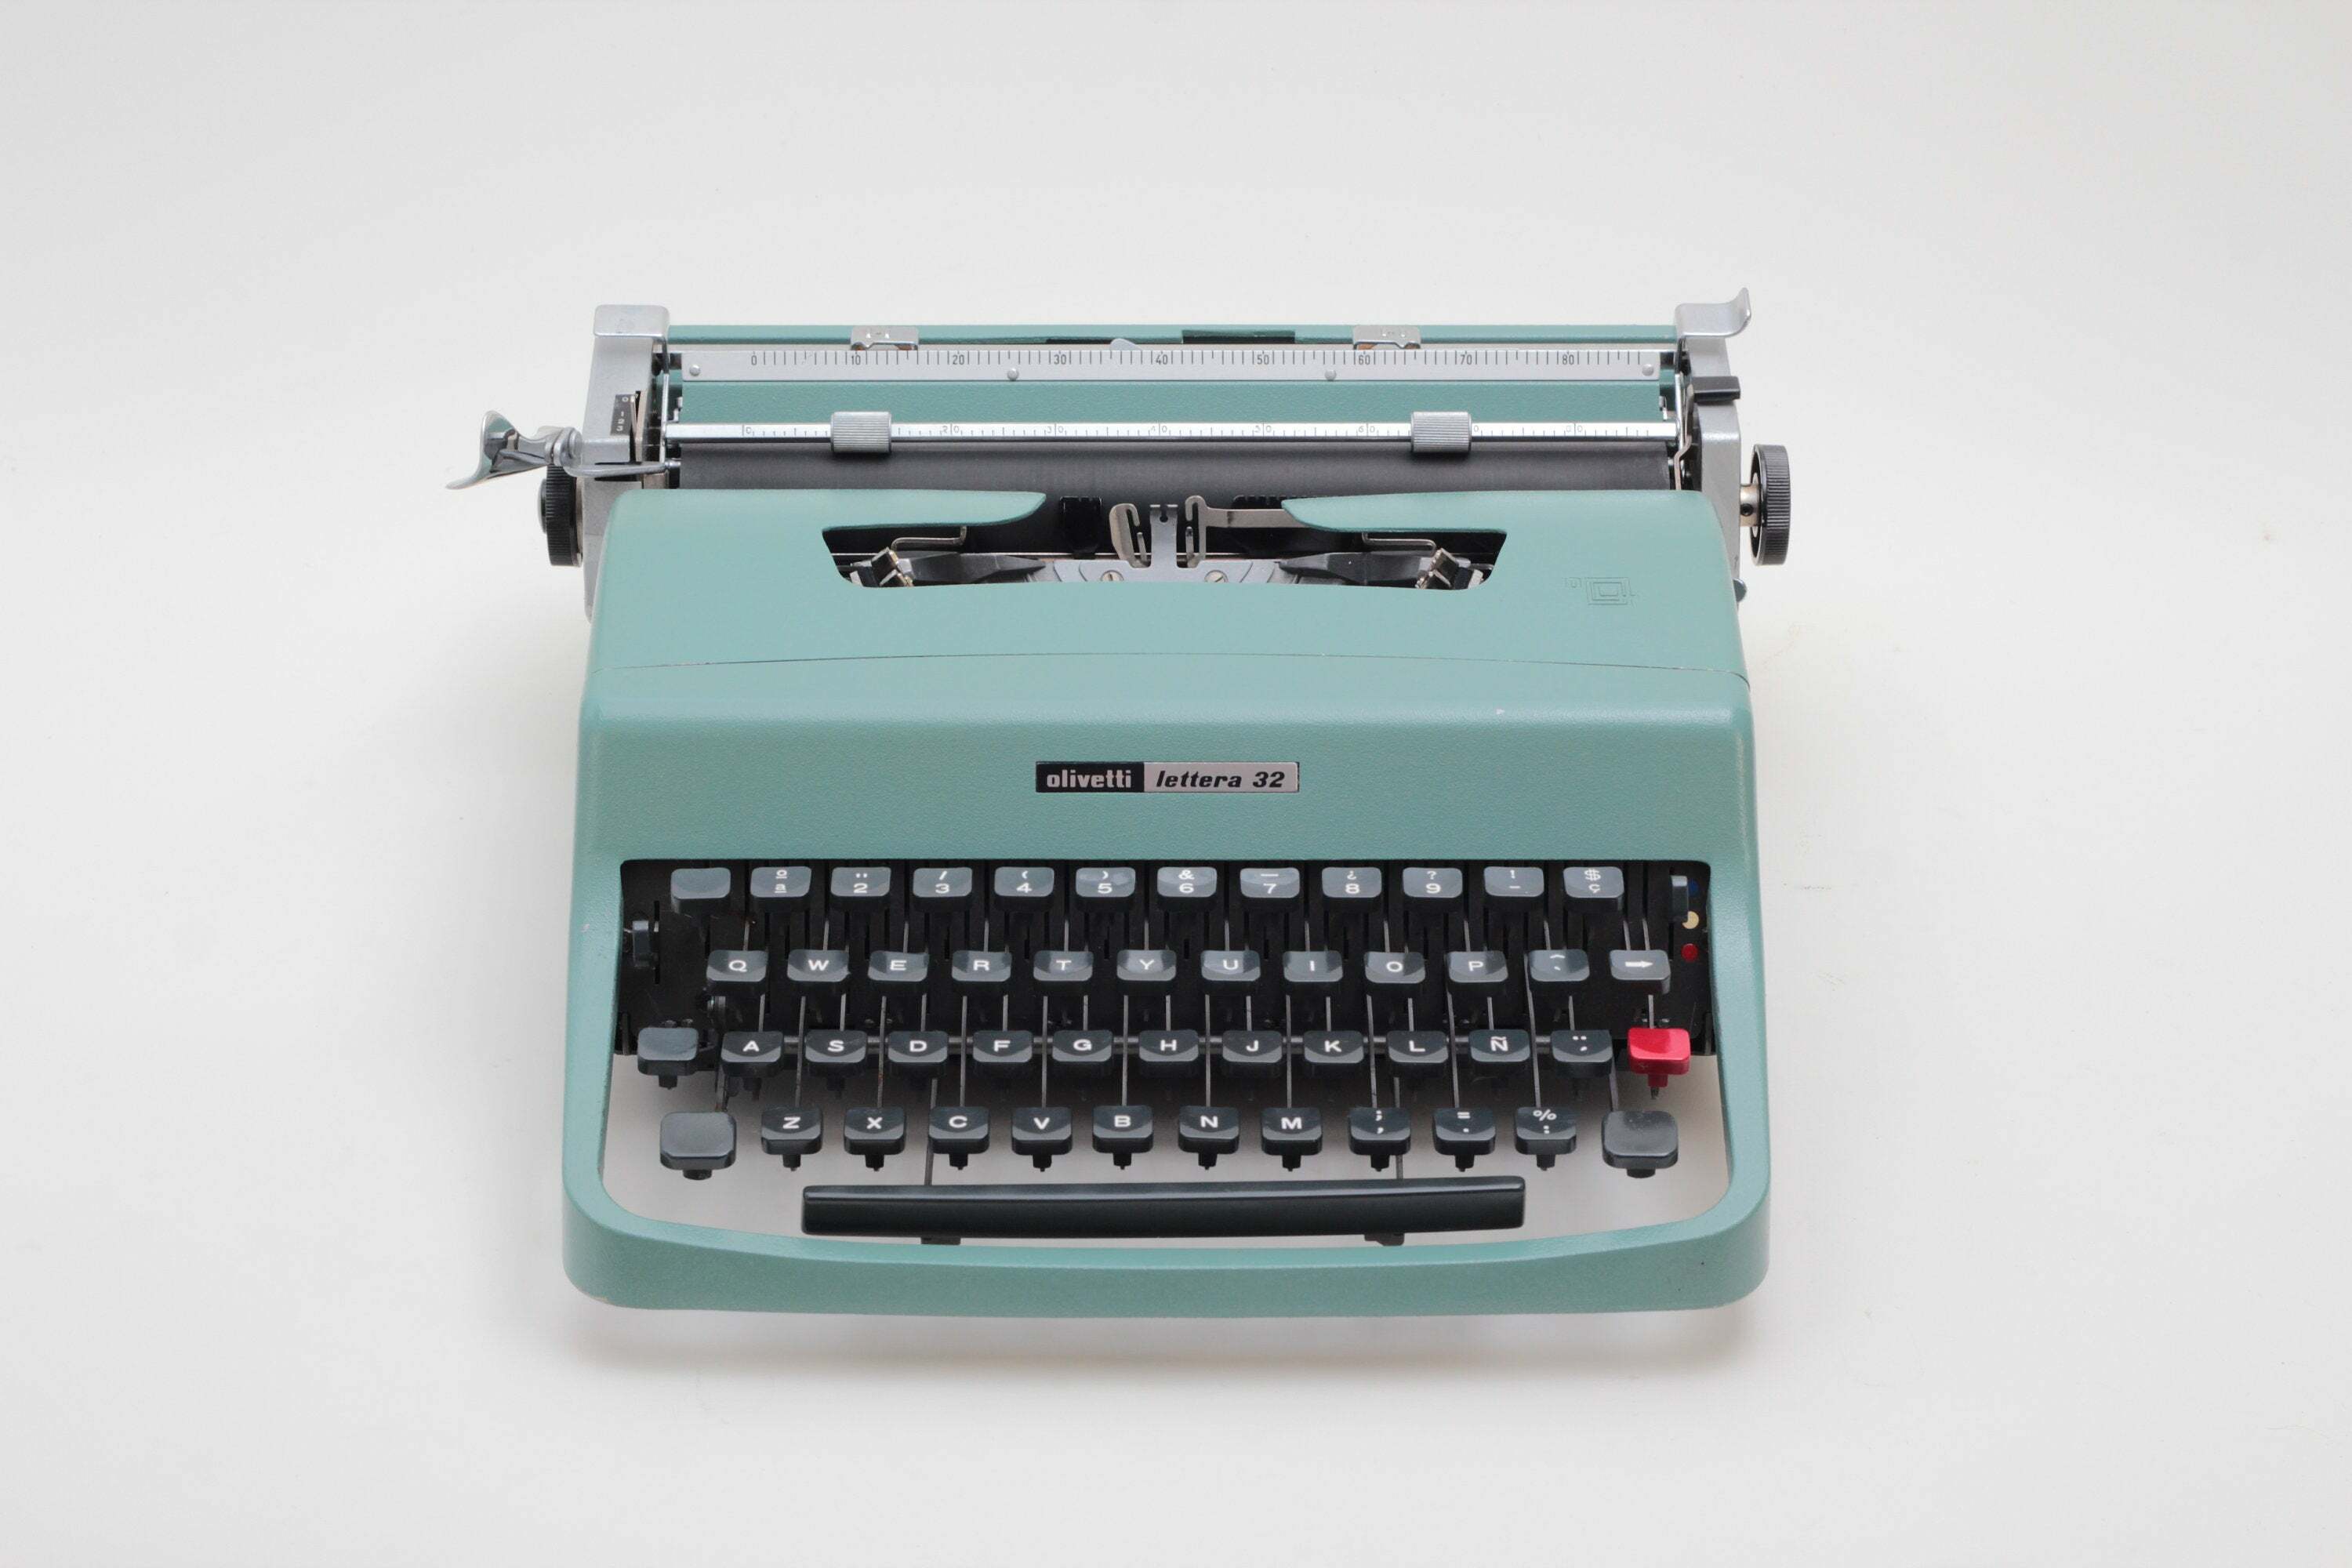 D82 Lexicon80 Studio 45 Black / Olivetti Schreibmaschine Farbband: Lettera 32 